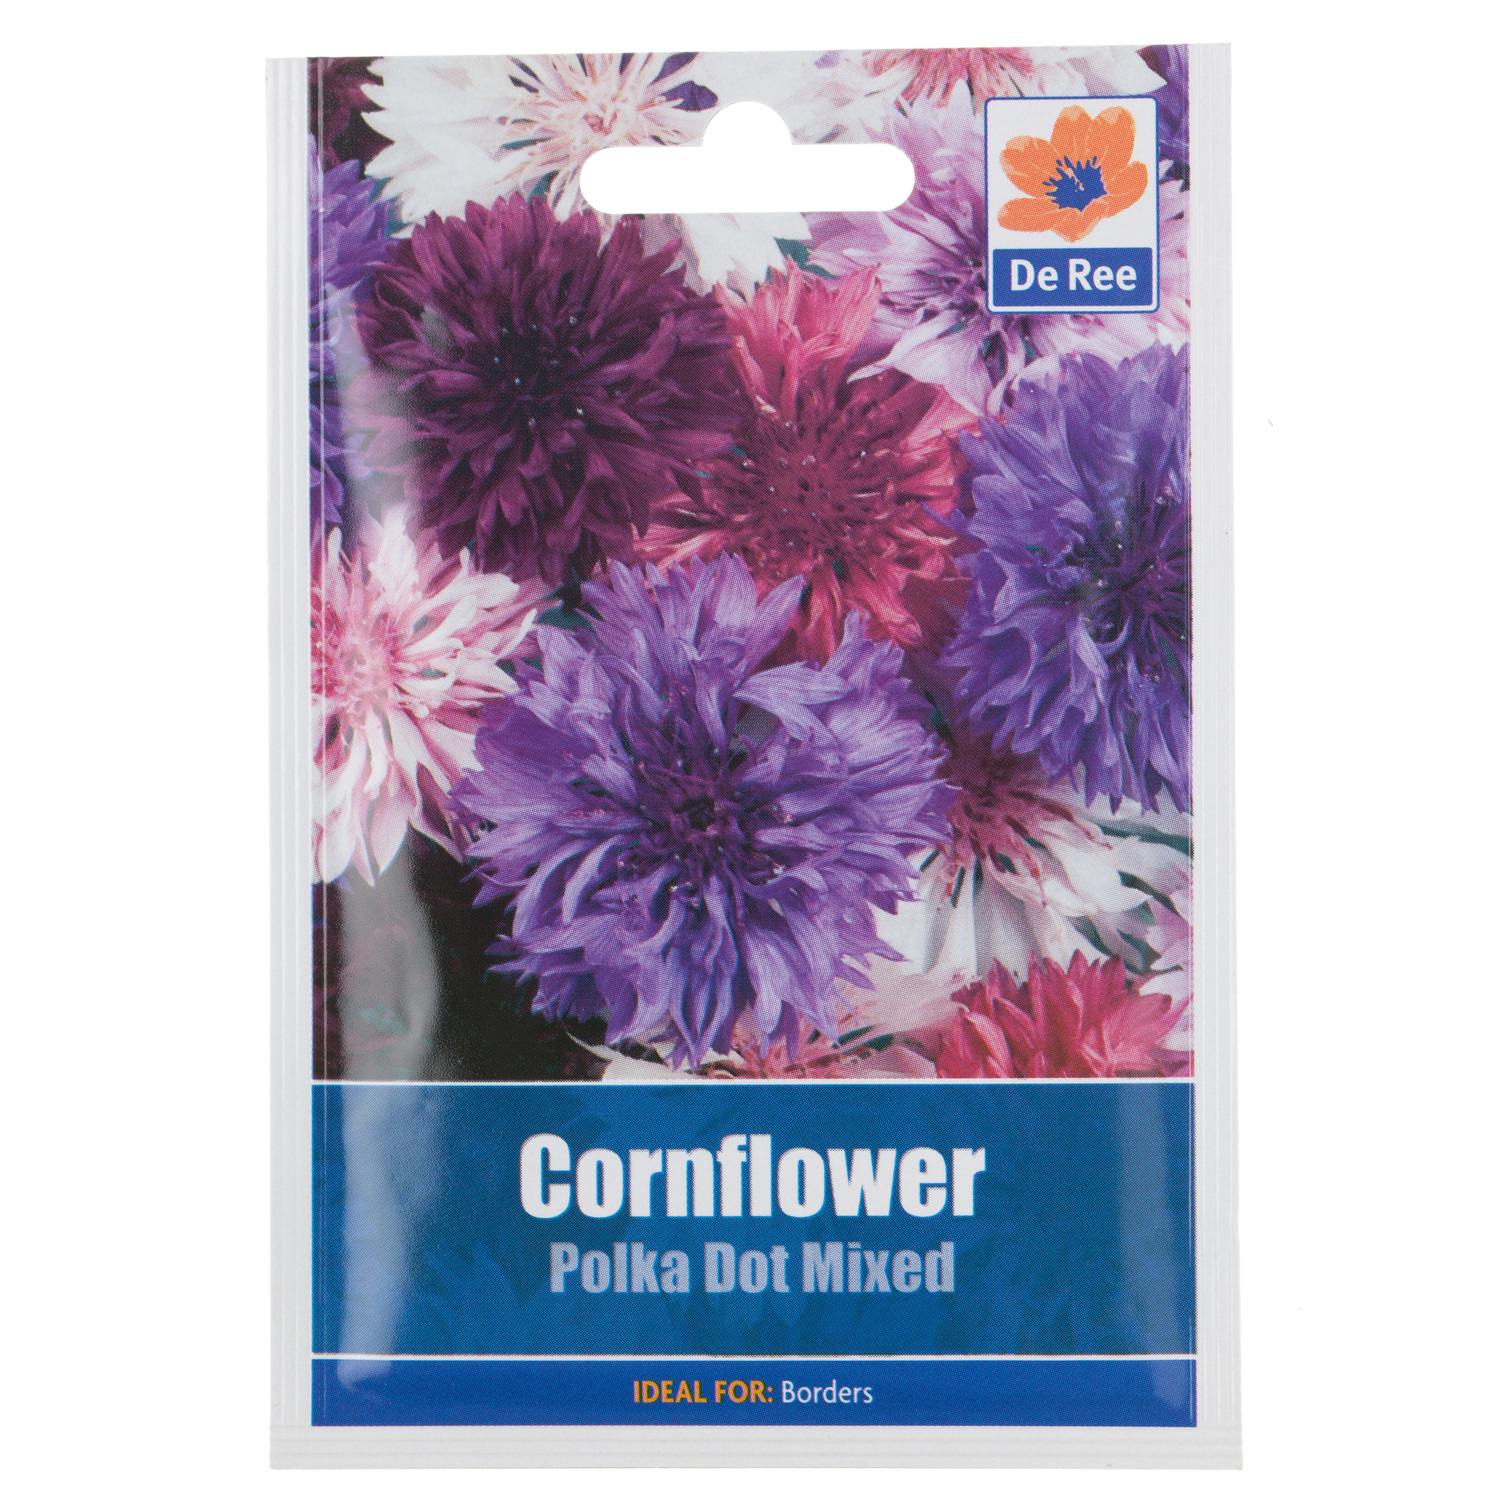 Cornflower Polka Dot Mixed Seed Packet Image